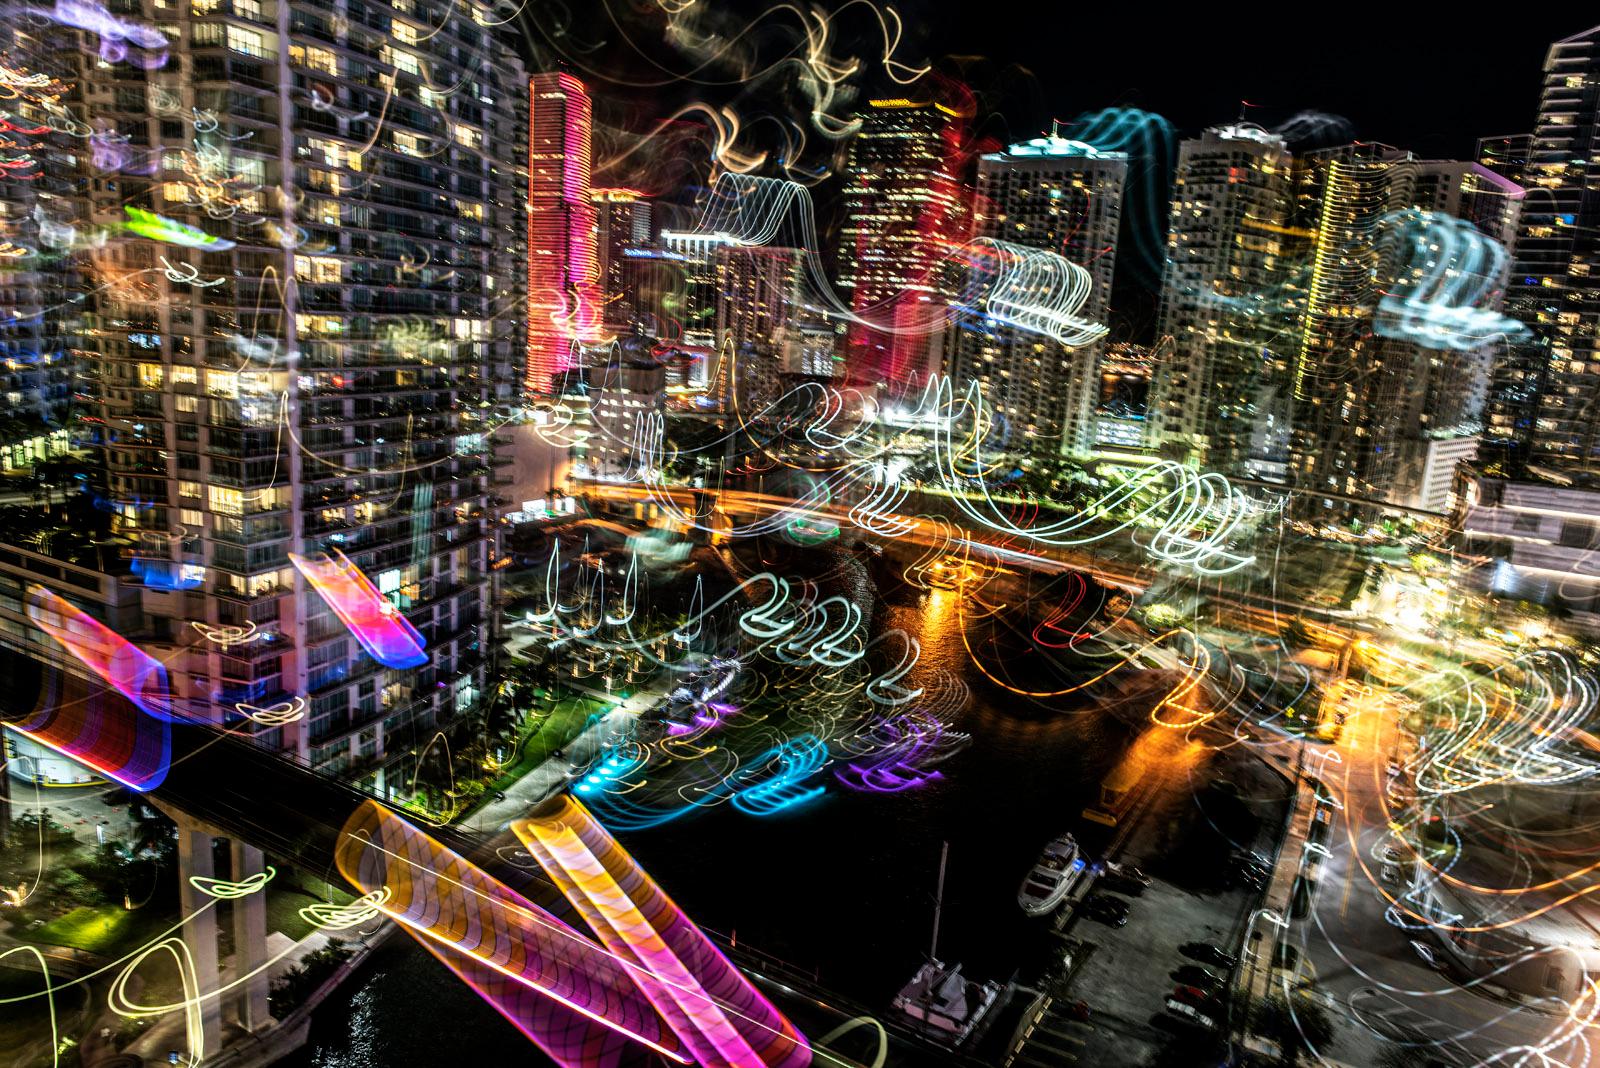 Color Photograph John Mazlish - « Miami Nights » - Photo surréaliste de Brickell, Miami, Floride